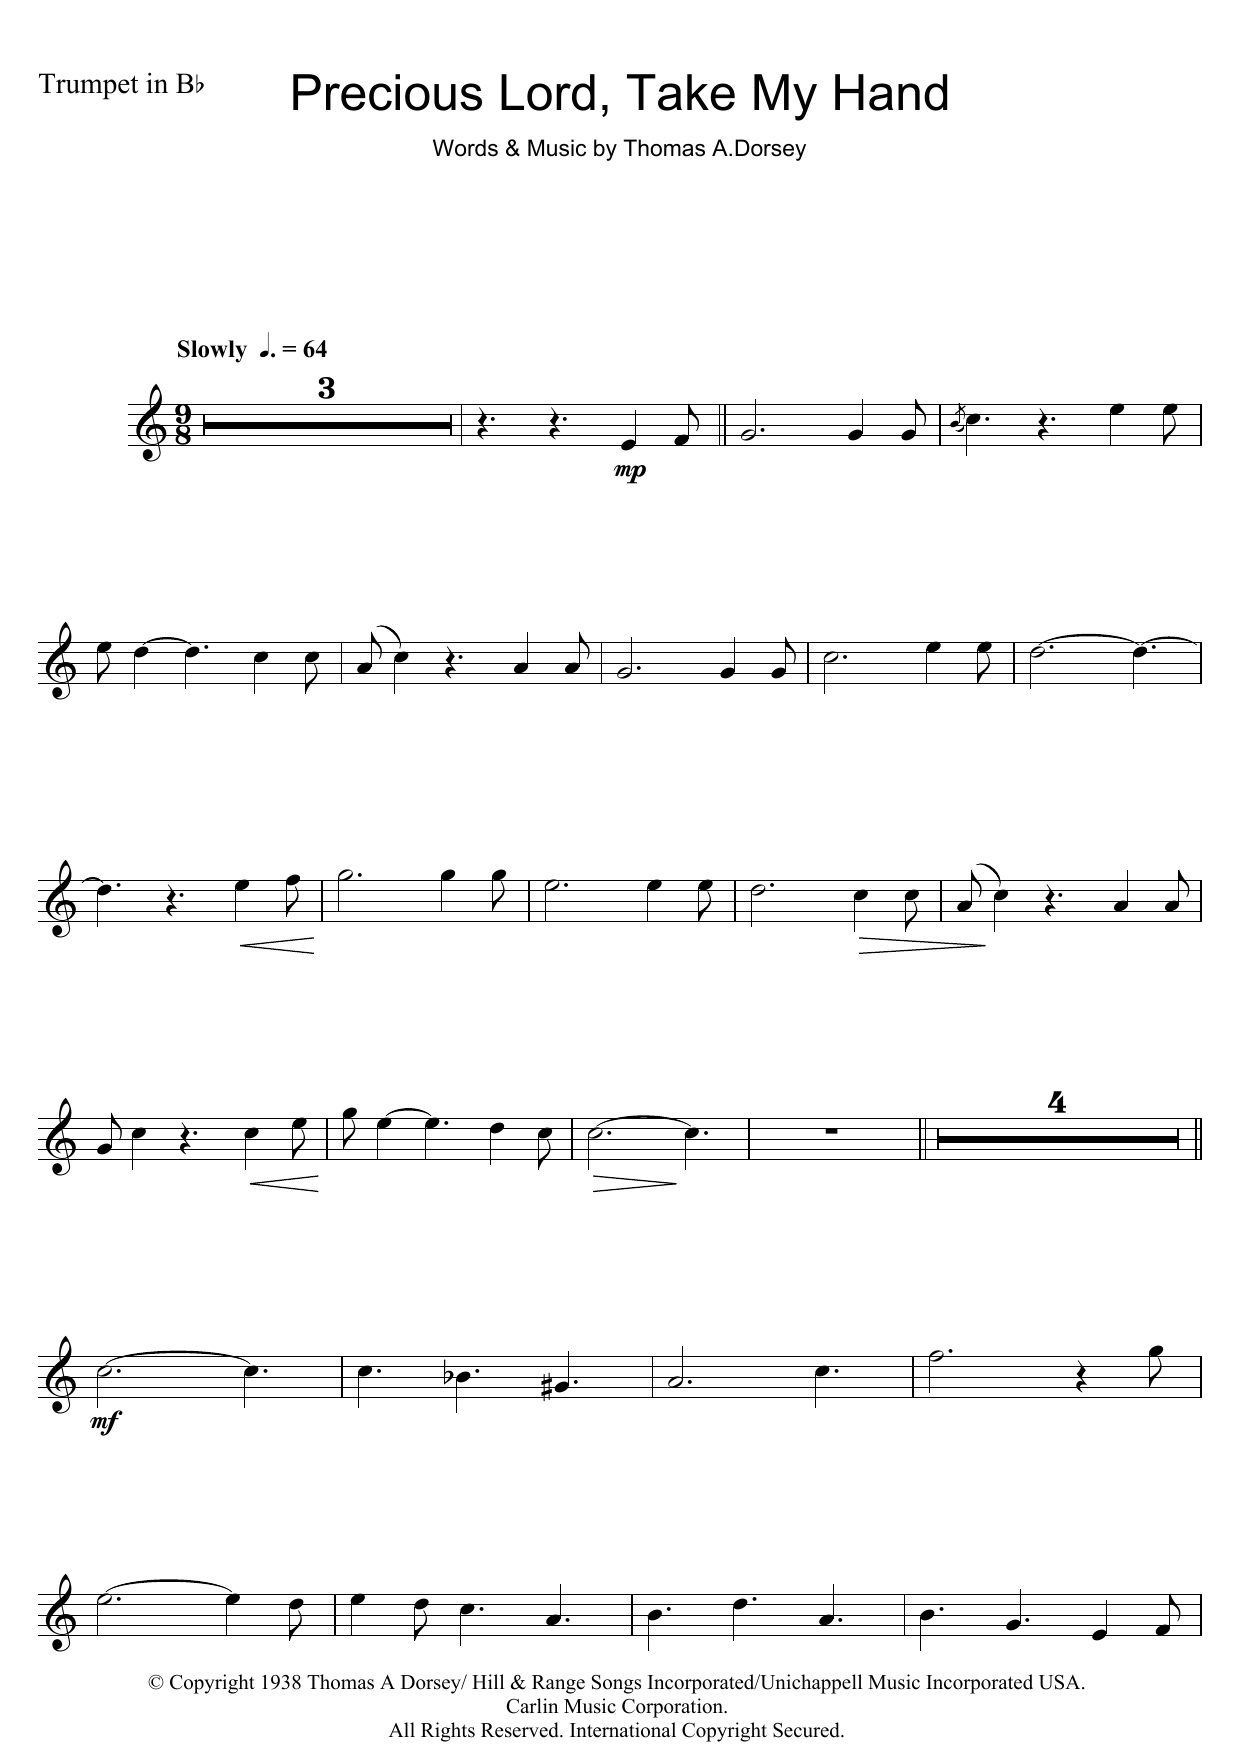 Aretha Franklin Precious Lord, Take My Hand (Take My Hand, Precious Lord) Sheet Music Notes & Chords for Clarinet - Download or Print PDF